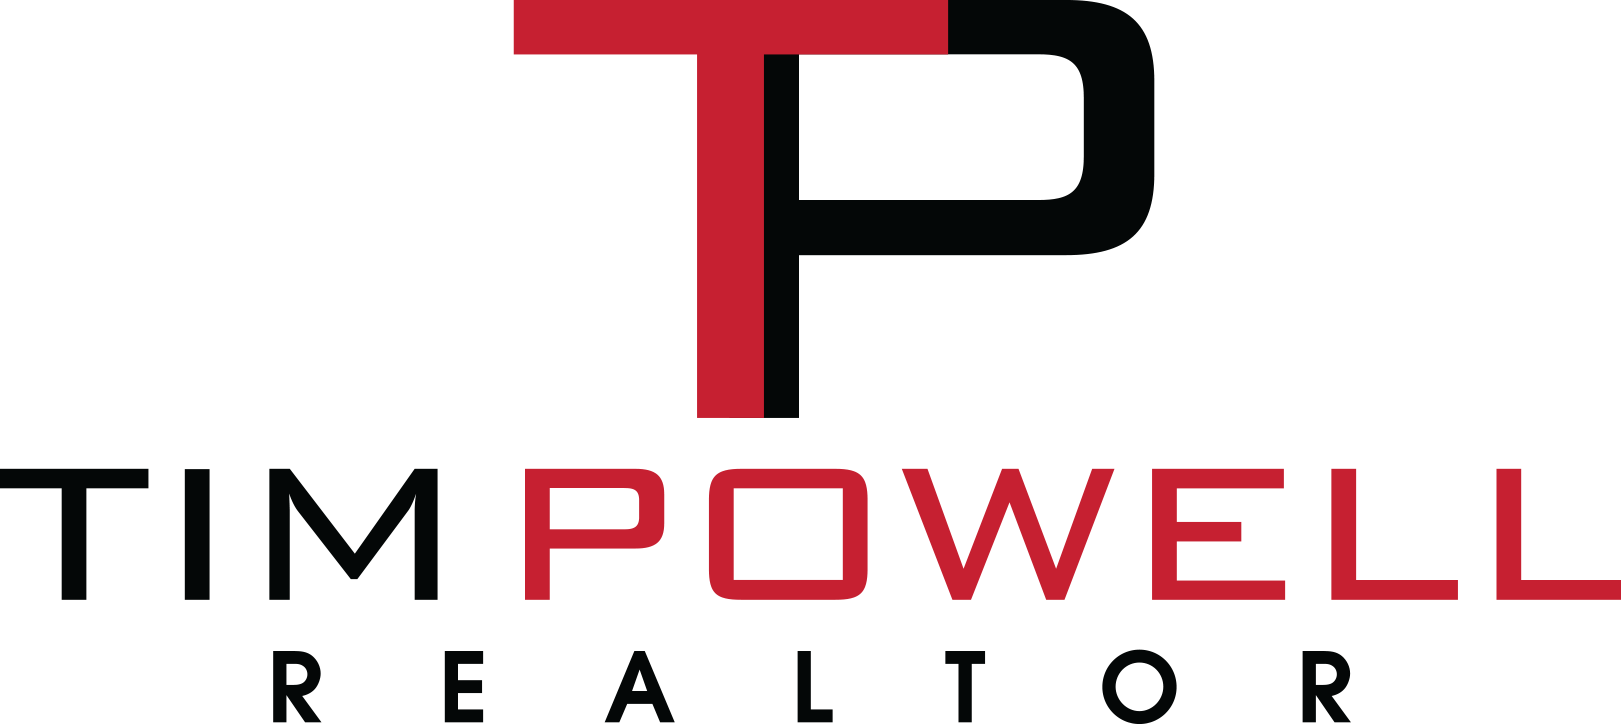 Tim Powell Logo